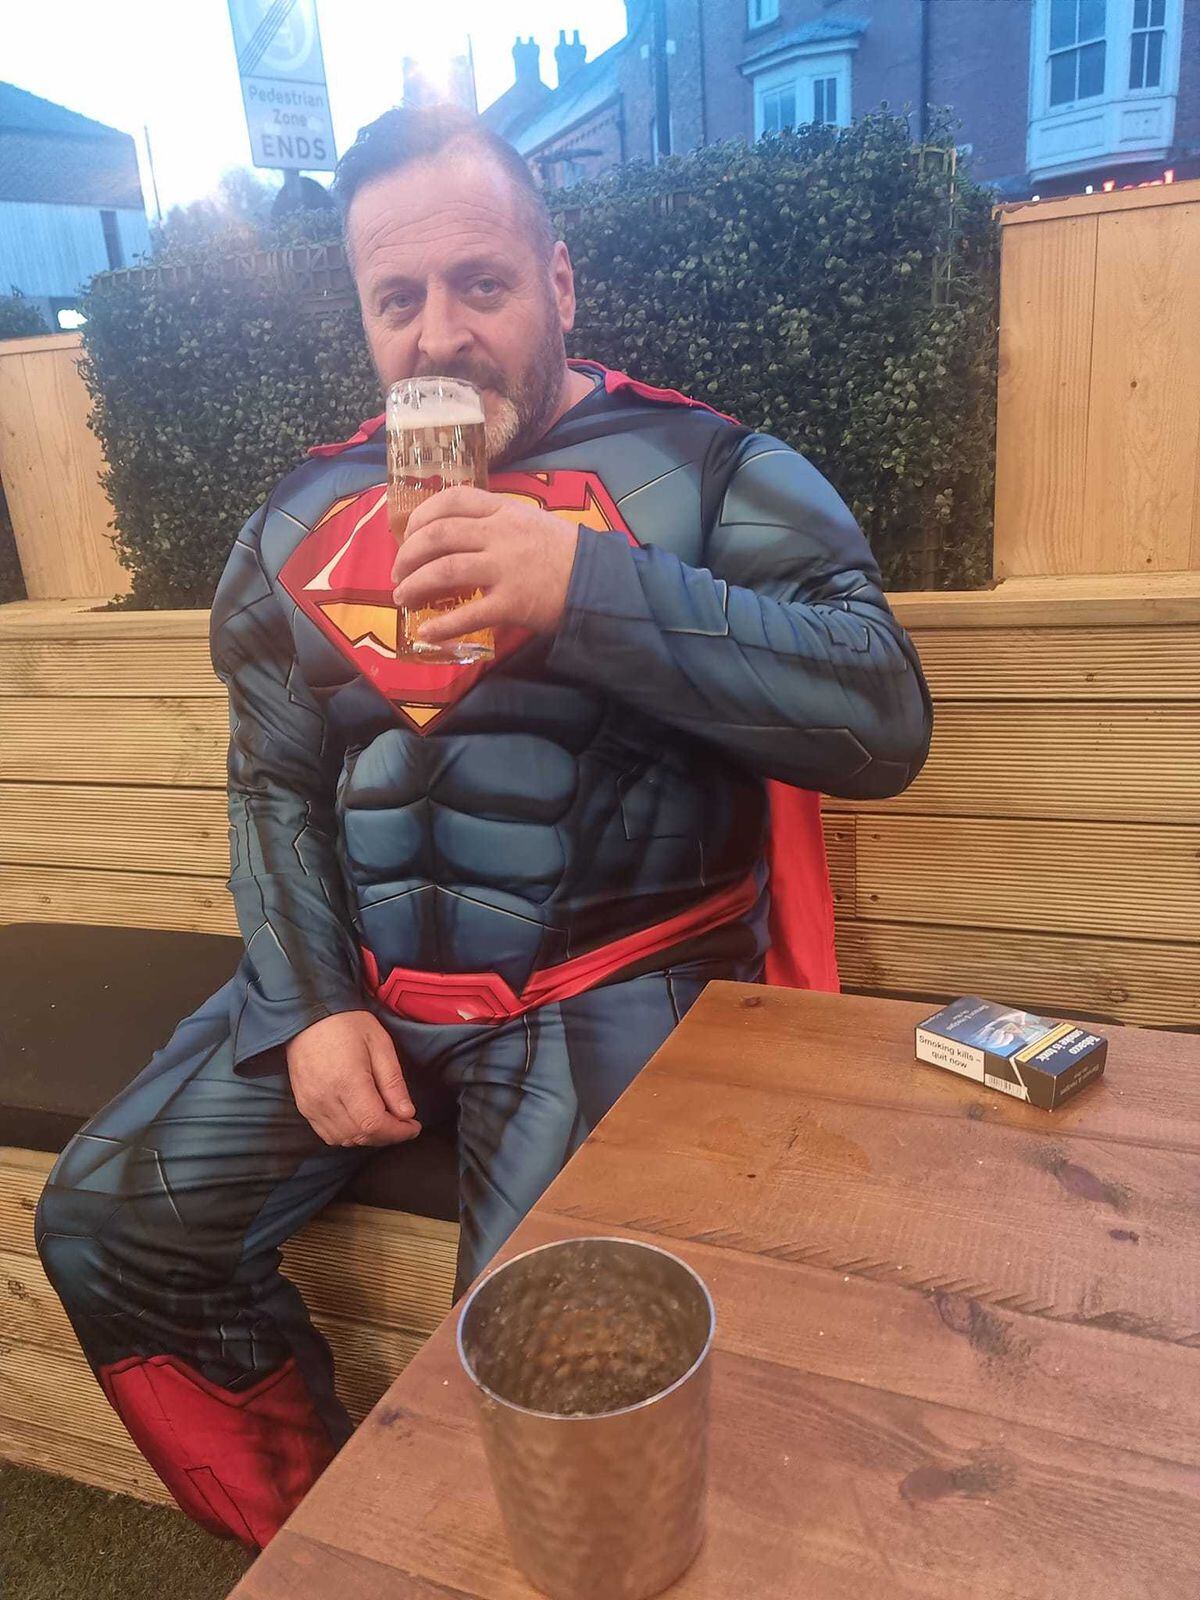 Superman having a well earned pint